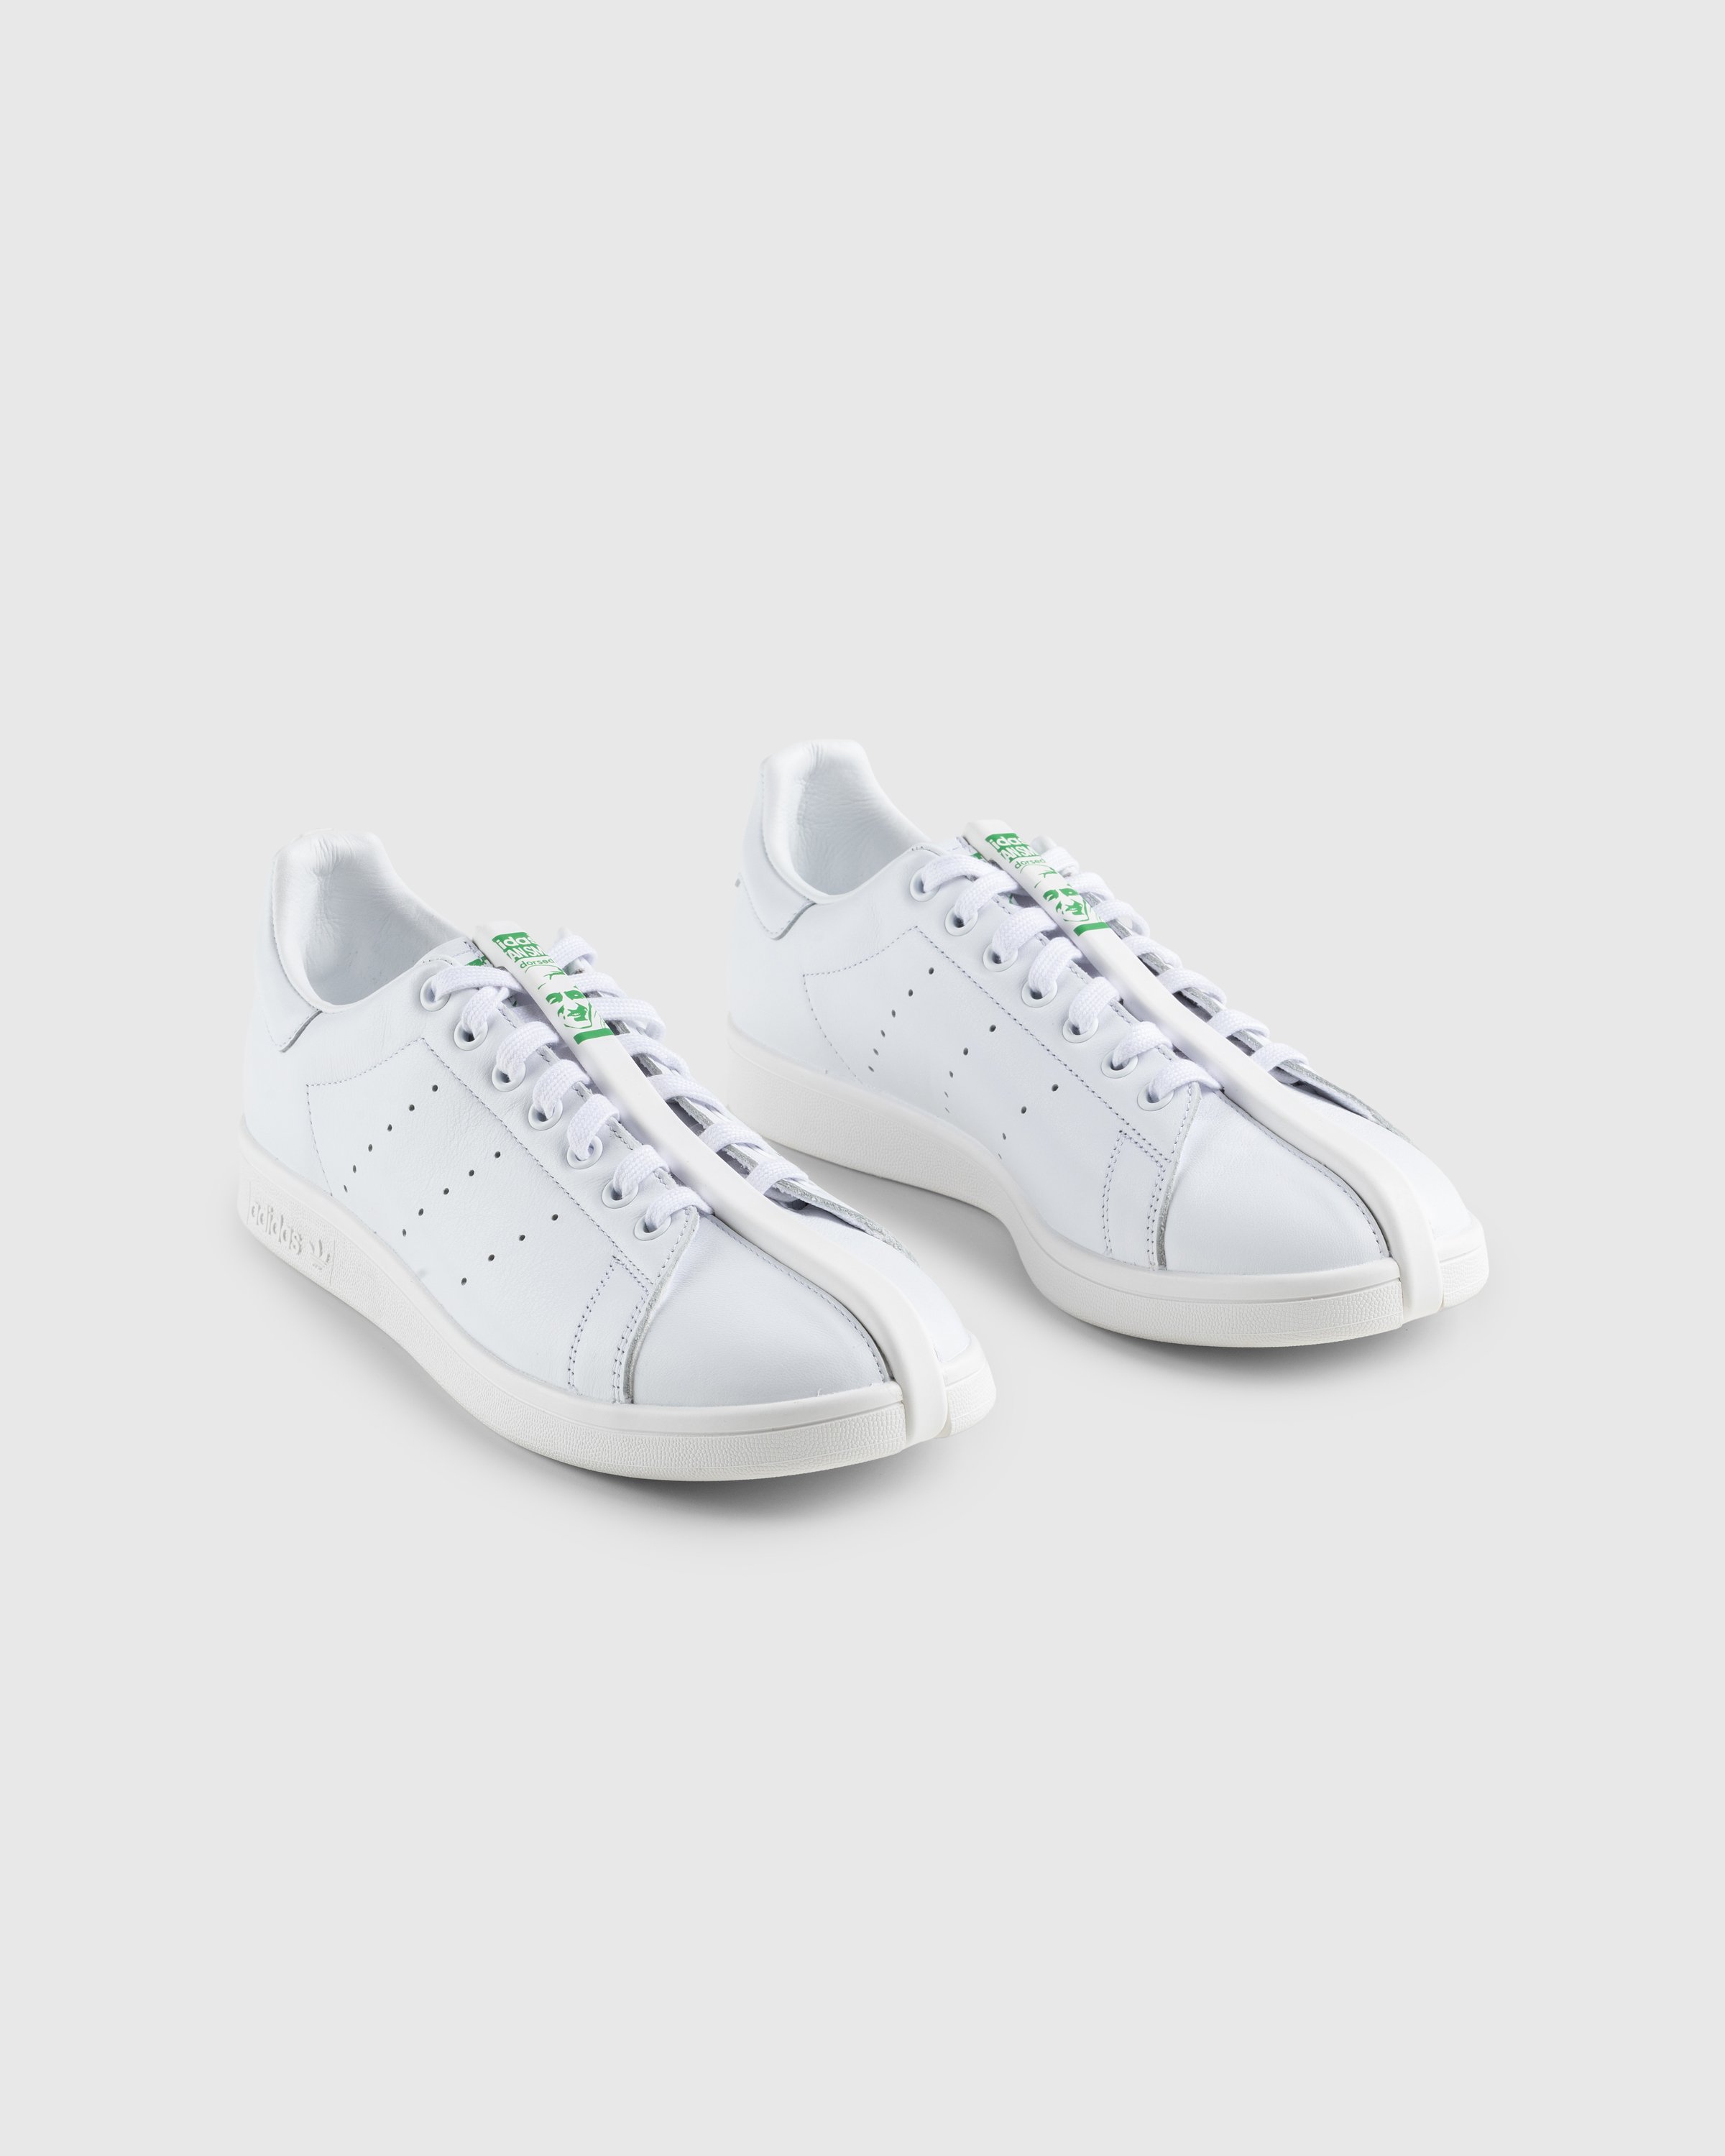 Craig Green x Adidas - CG Split Stan Smith CWHITE/CWHITE/CBLACK - Footwear - White - Image 3